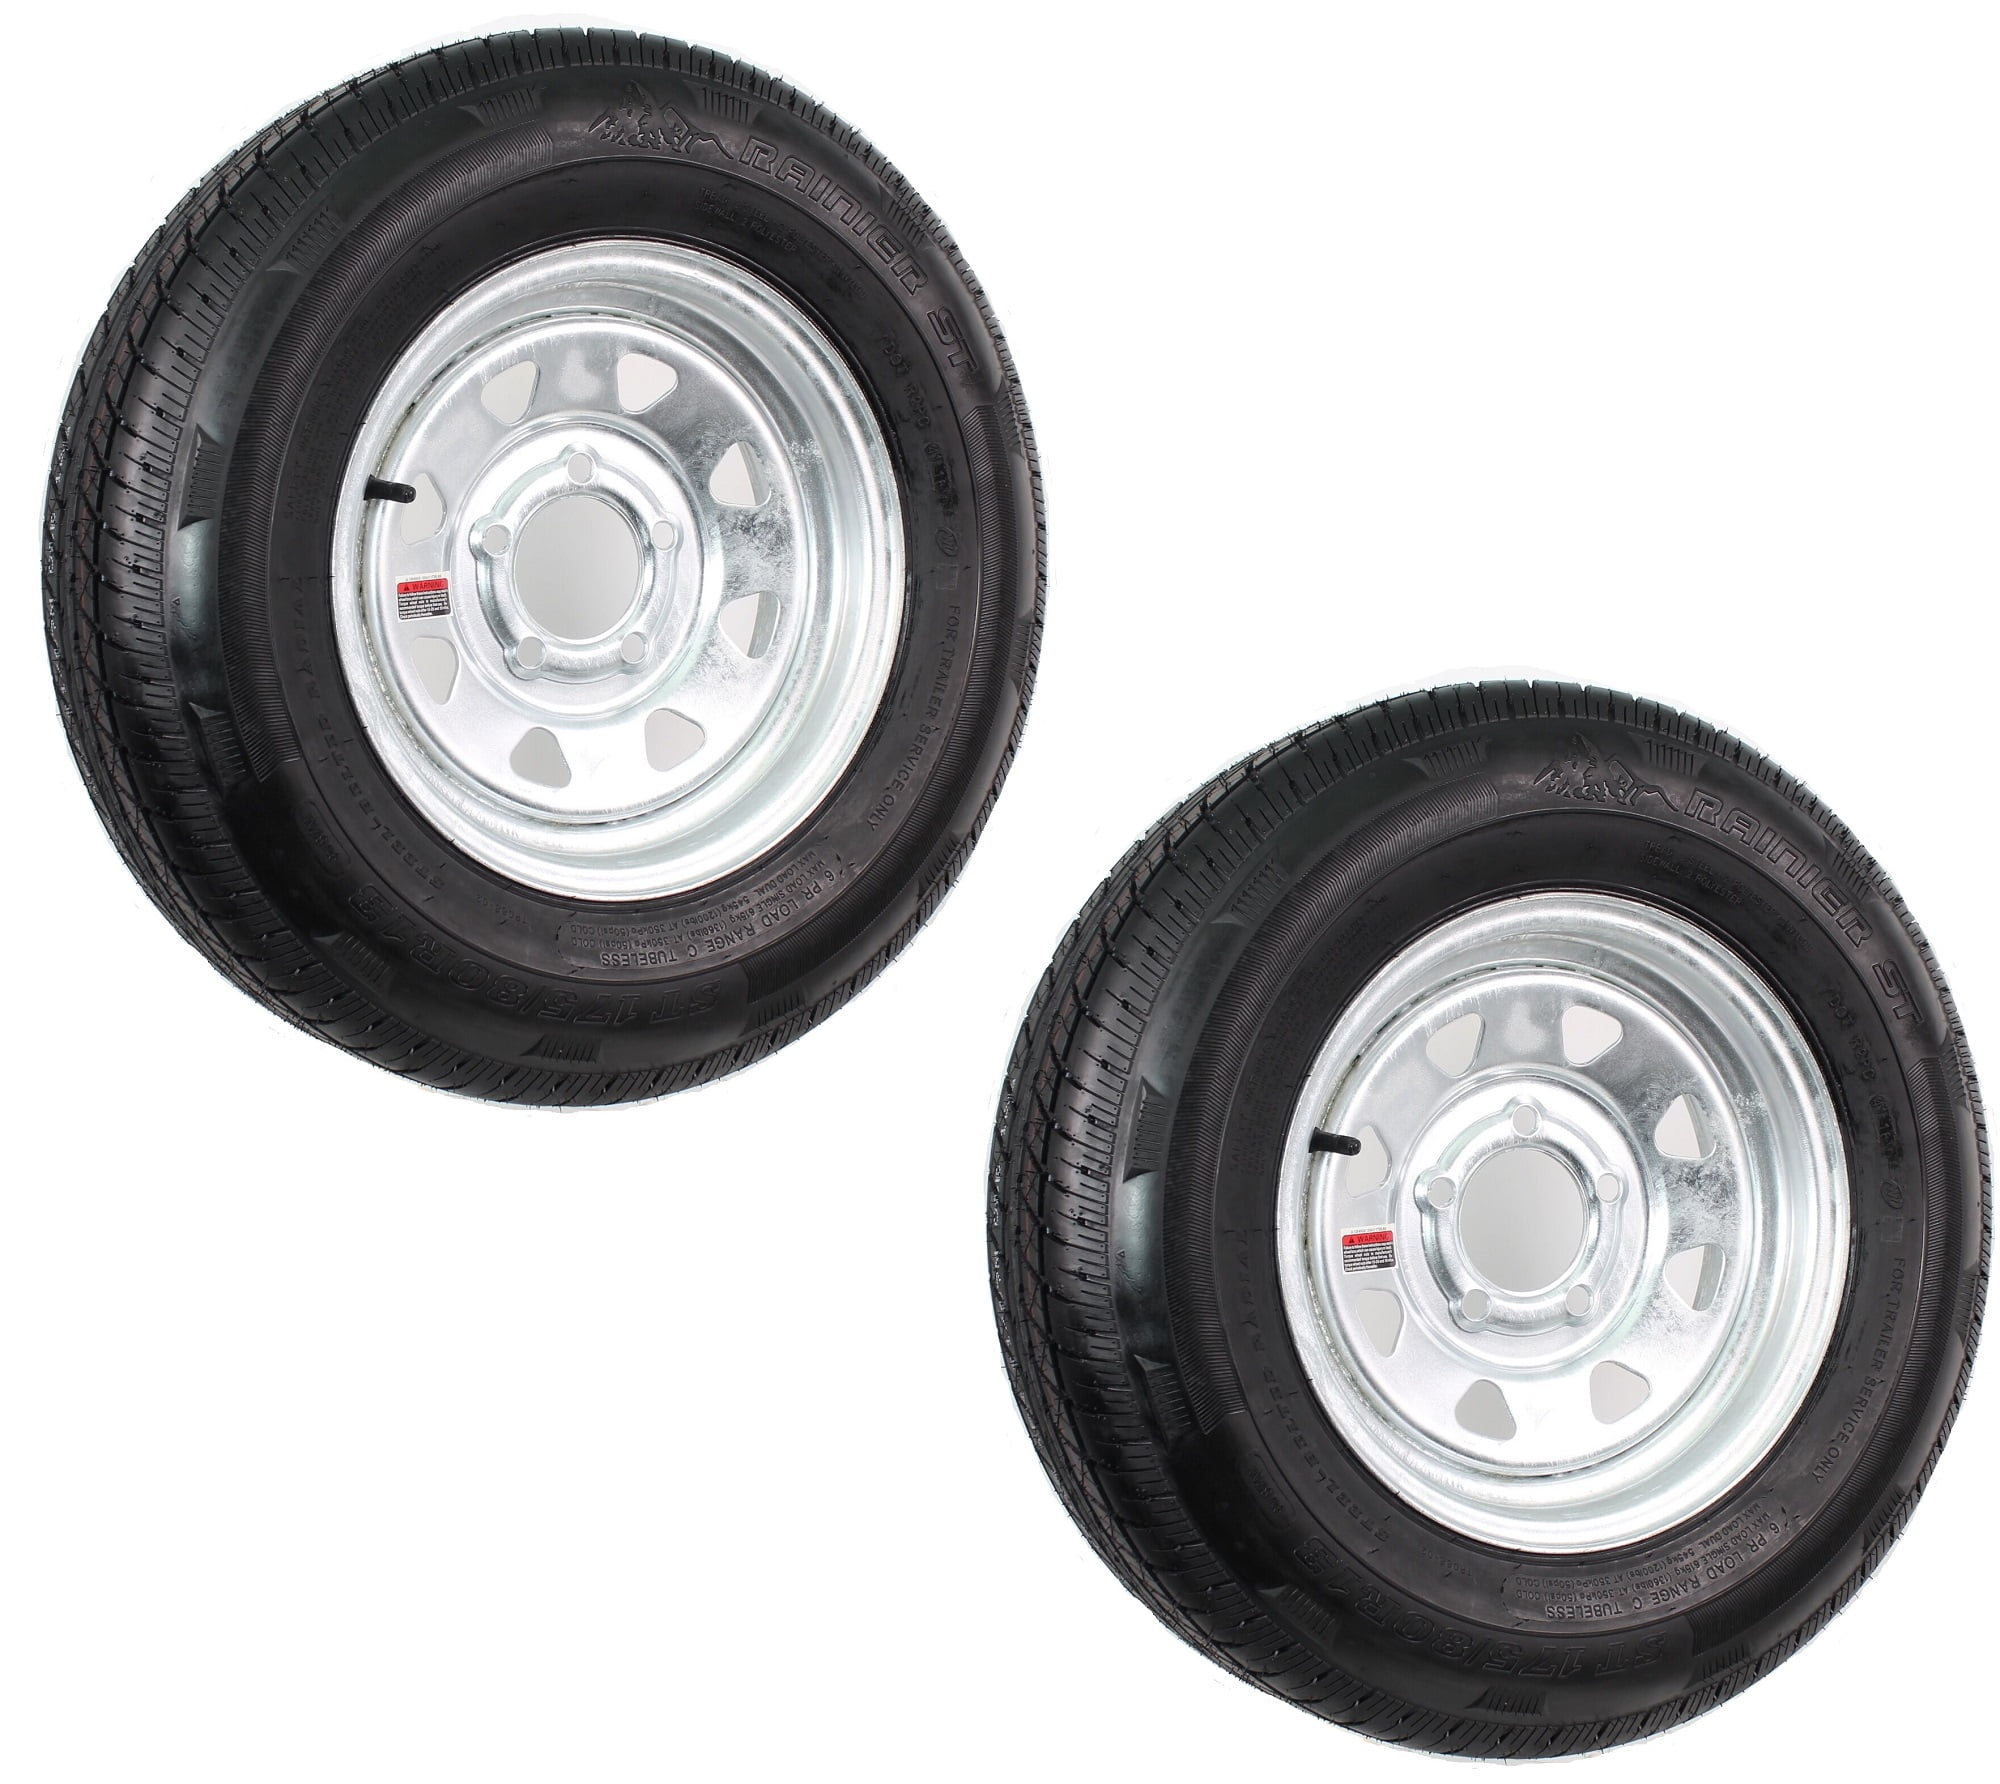 5-4.5 Spoke Wheel Silver Trailer Tire On Rim Radial ST175/80R13 LRC 1360 Lb